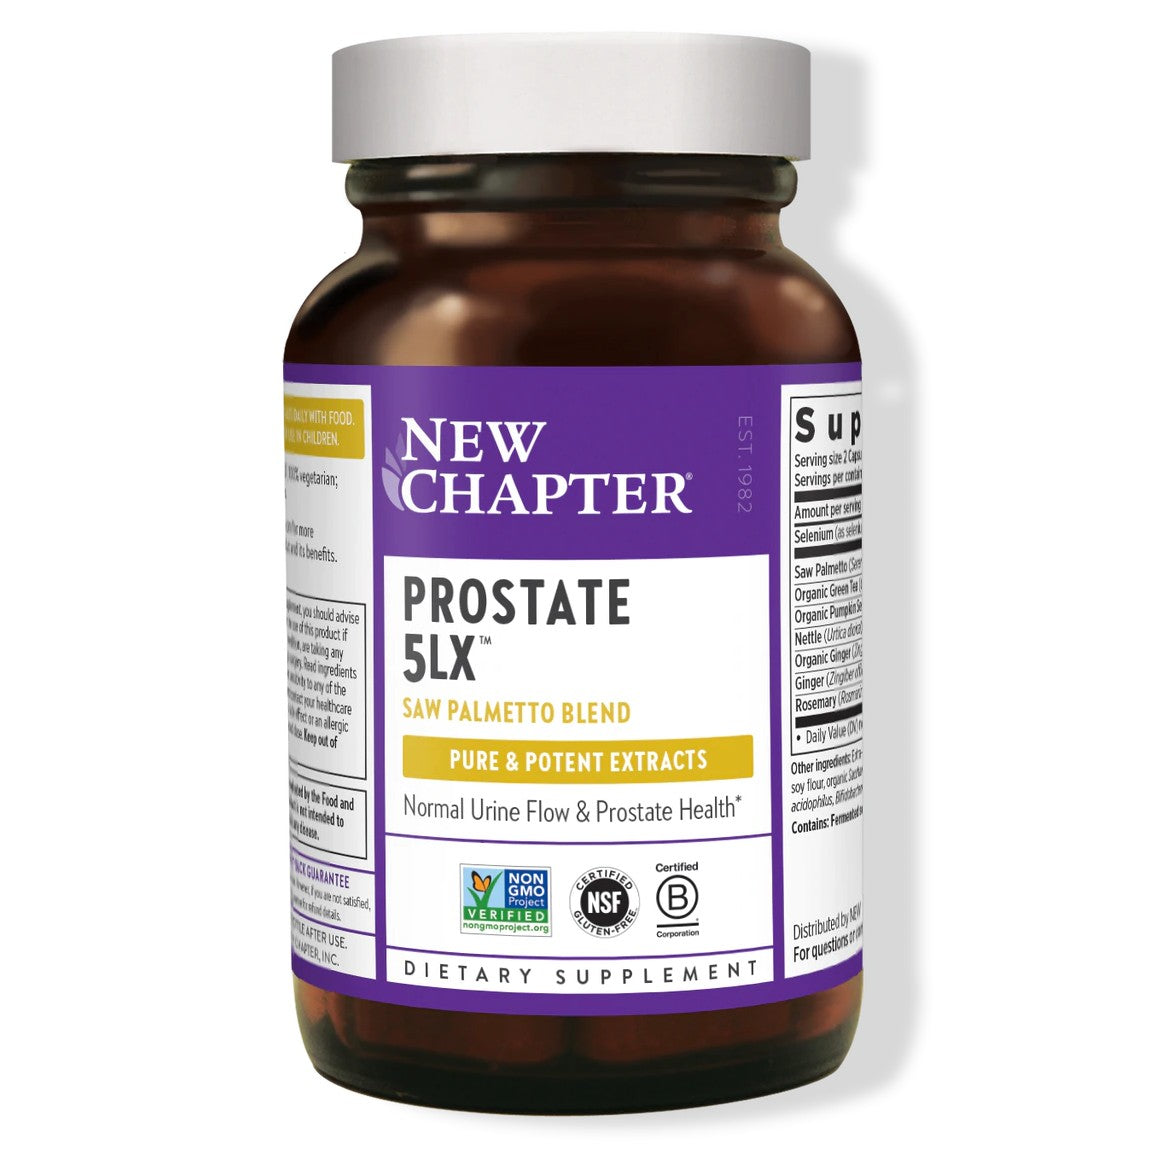 Prostate 5LX: Saw Palmetto Blend